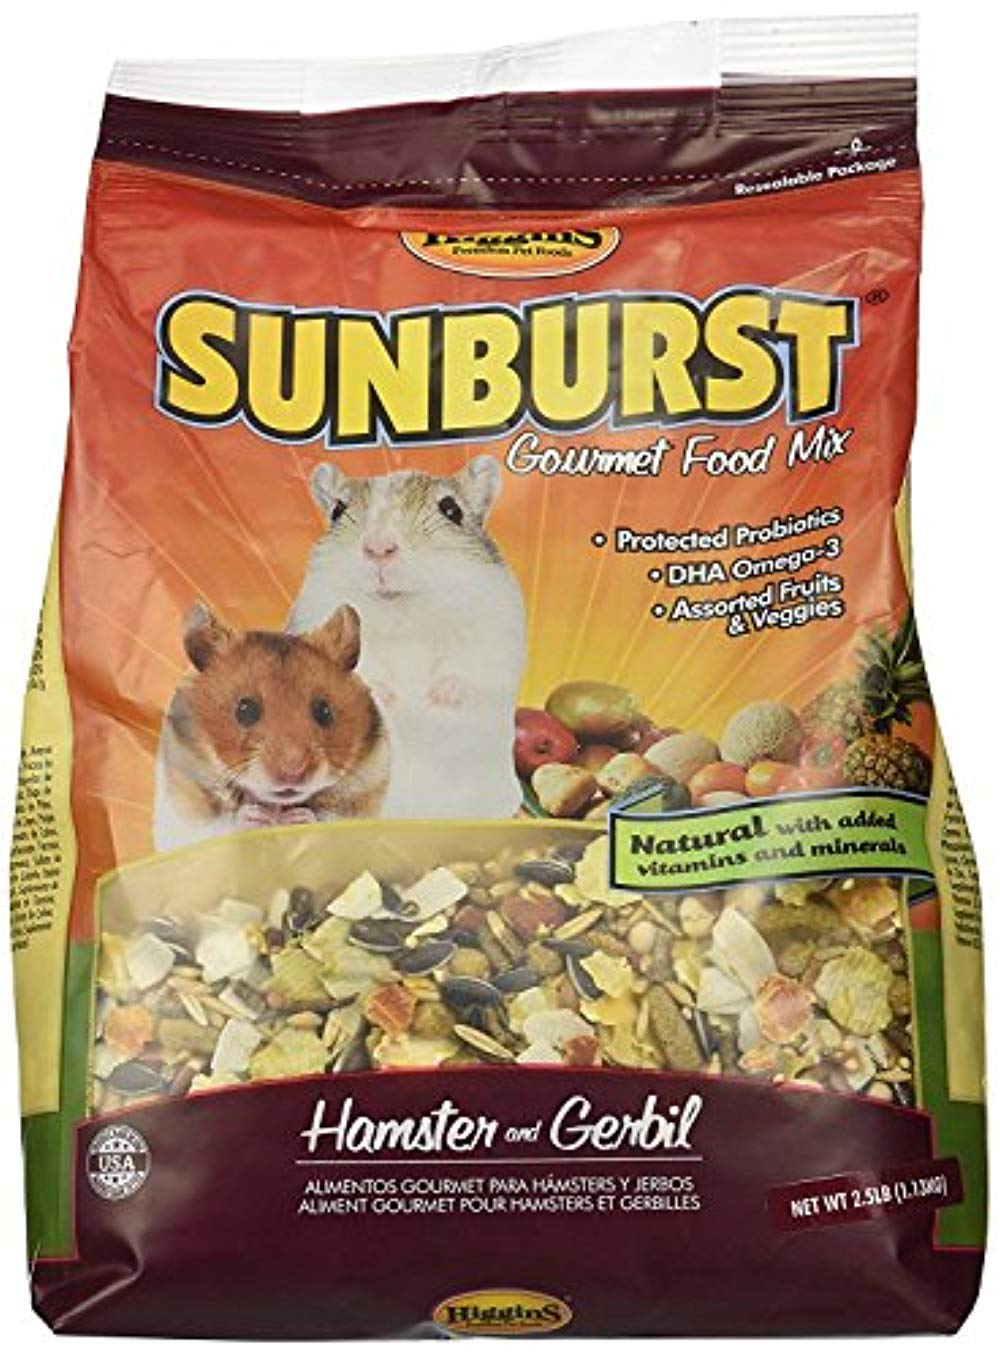 Higgins Sunburst Gourmet Food Mix for Hamsters and Gerbils